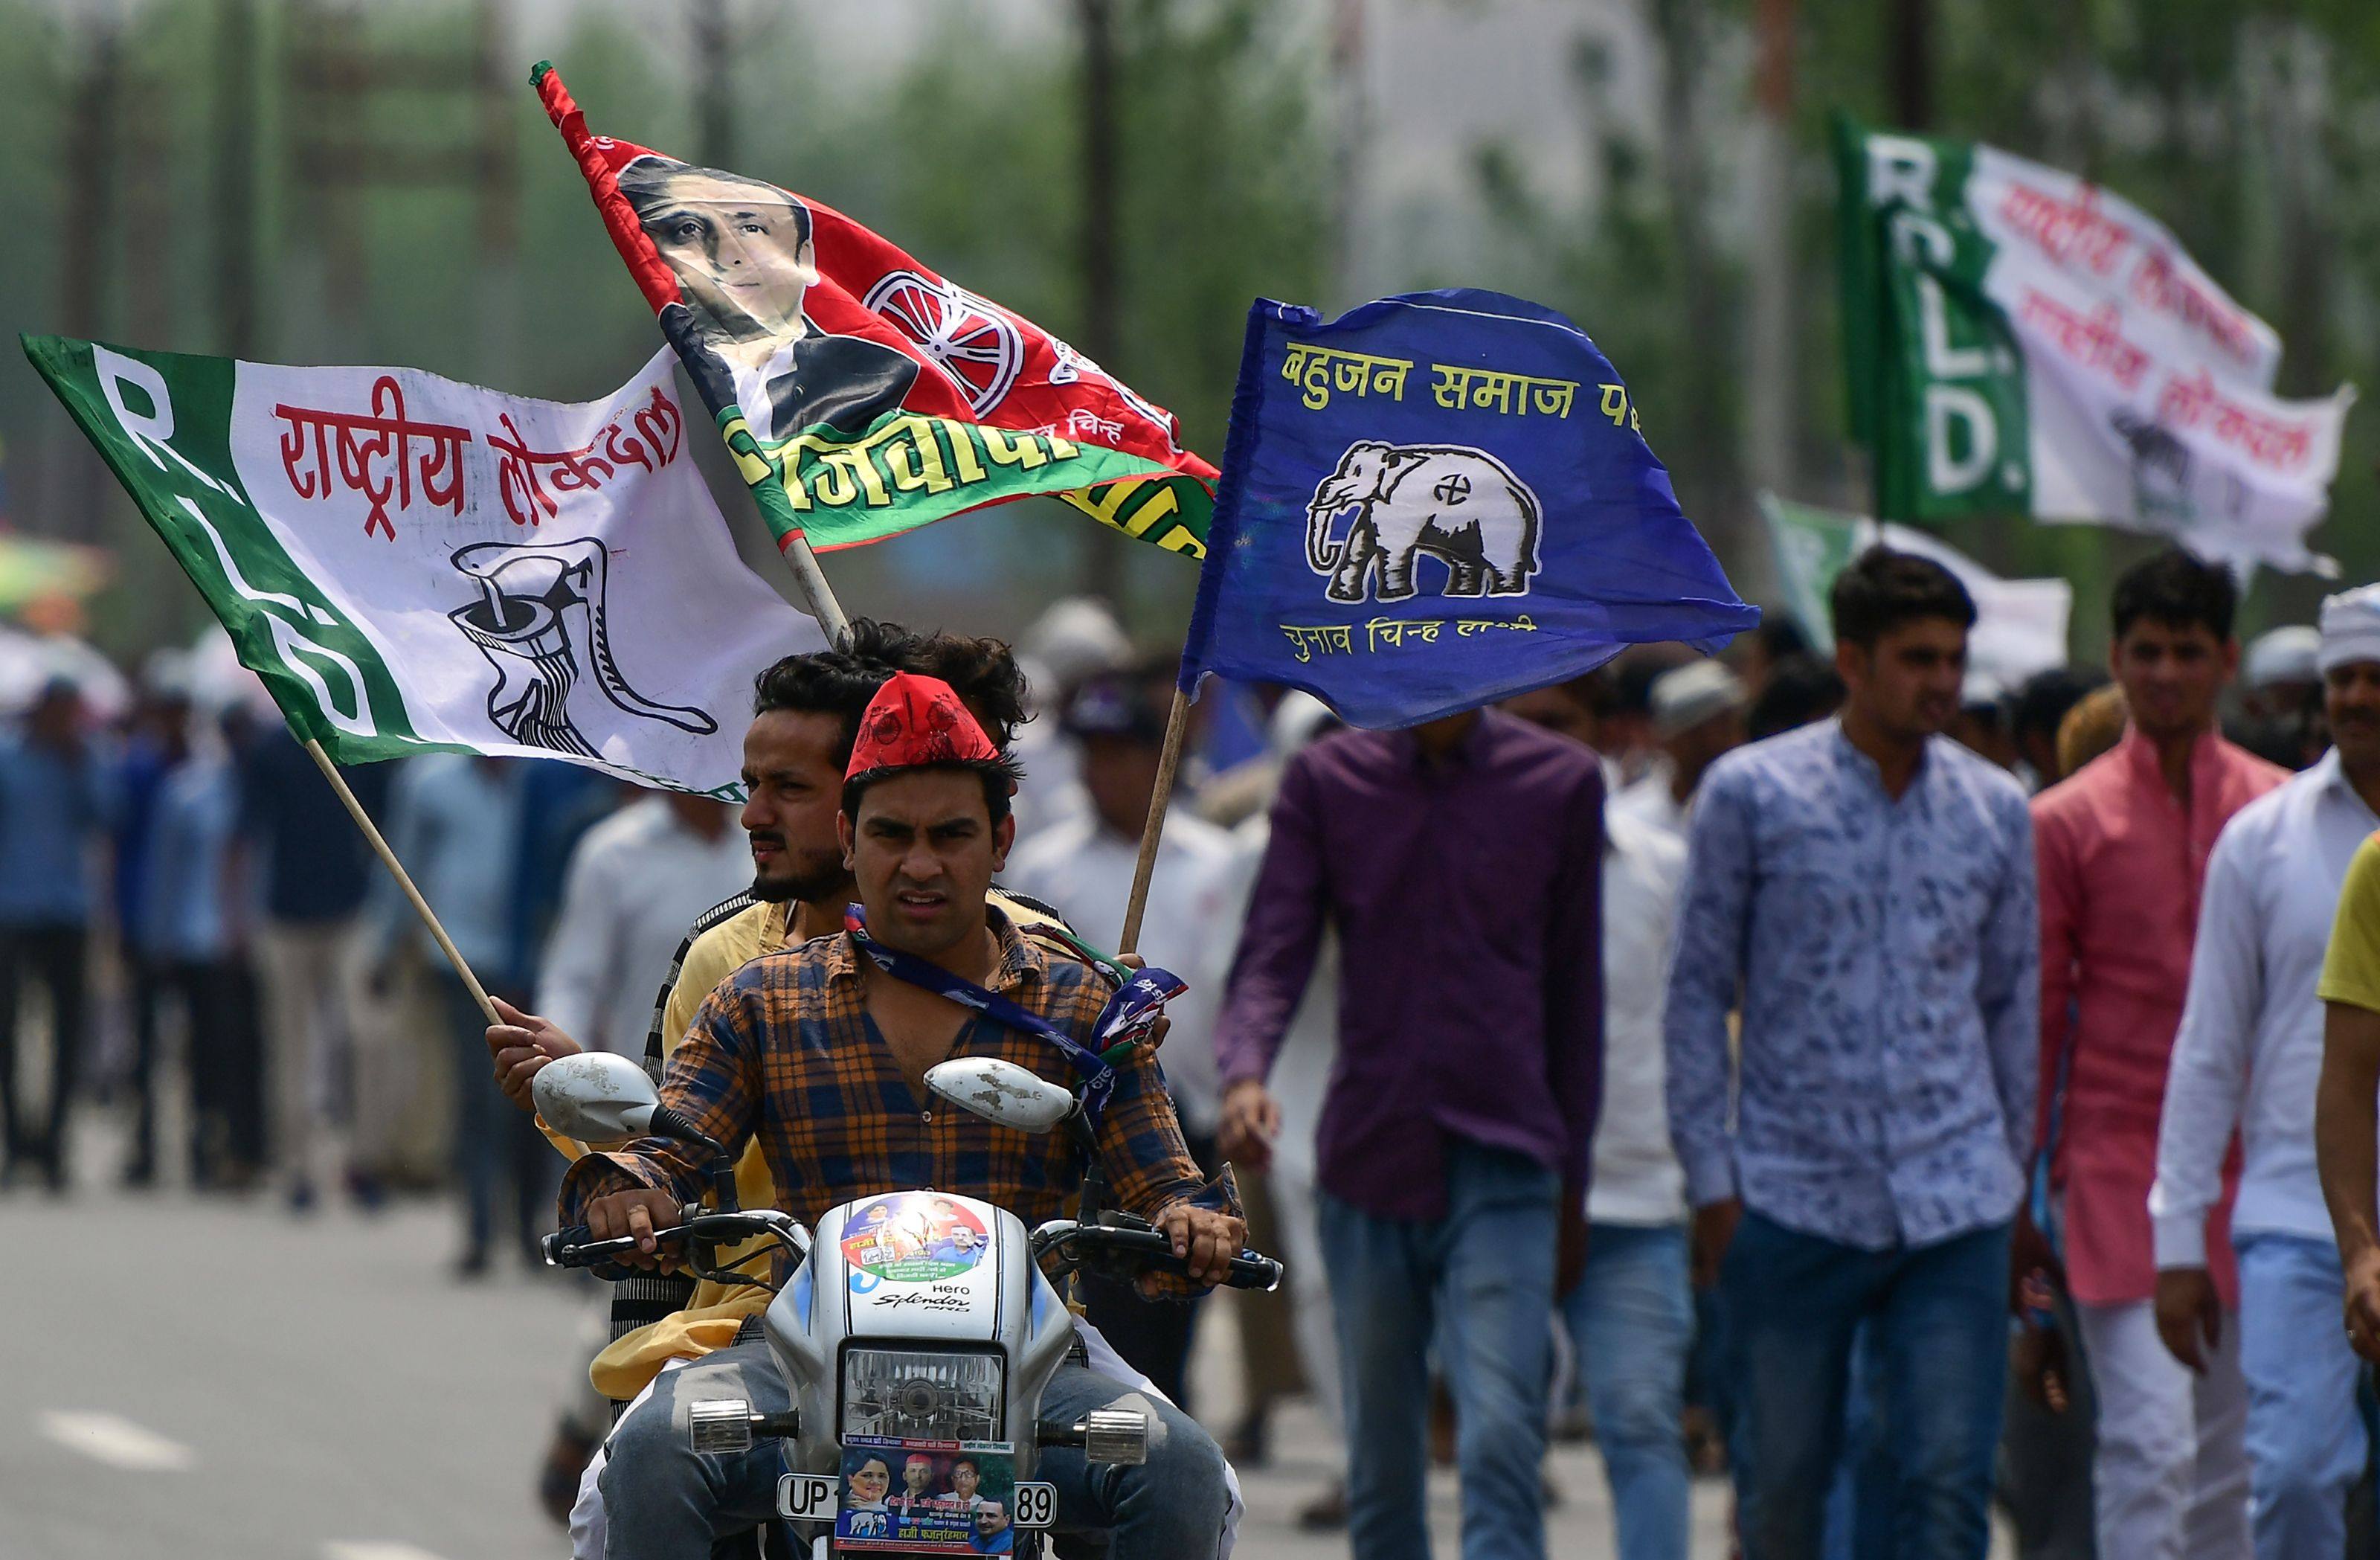 Indian supporters of Bahujan Samaj Party, Samajwadi Party and Rashtriya Lok Dal ride a motorcycle in Uttar Pradesh state in 2019. Photo: AFP